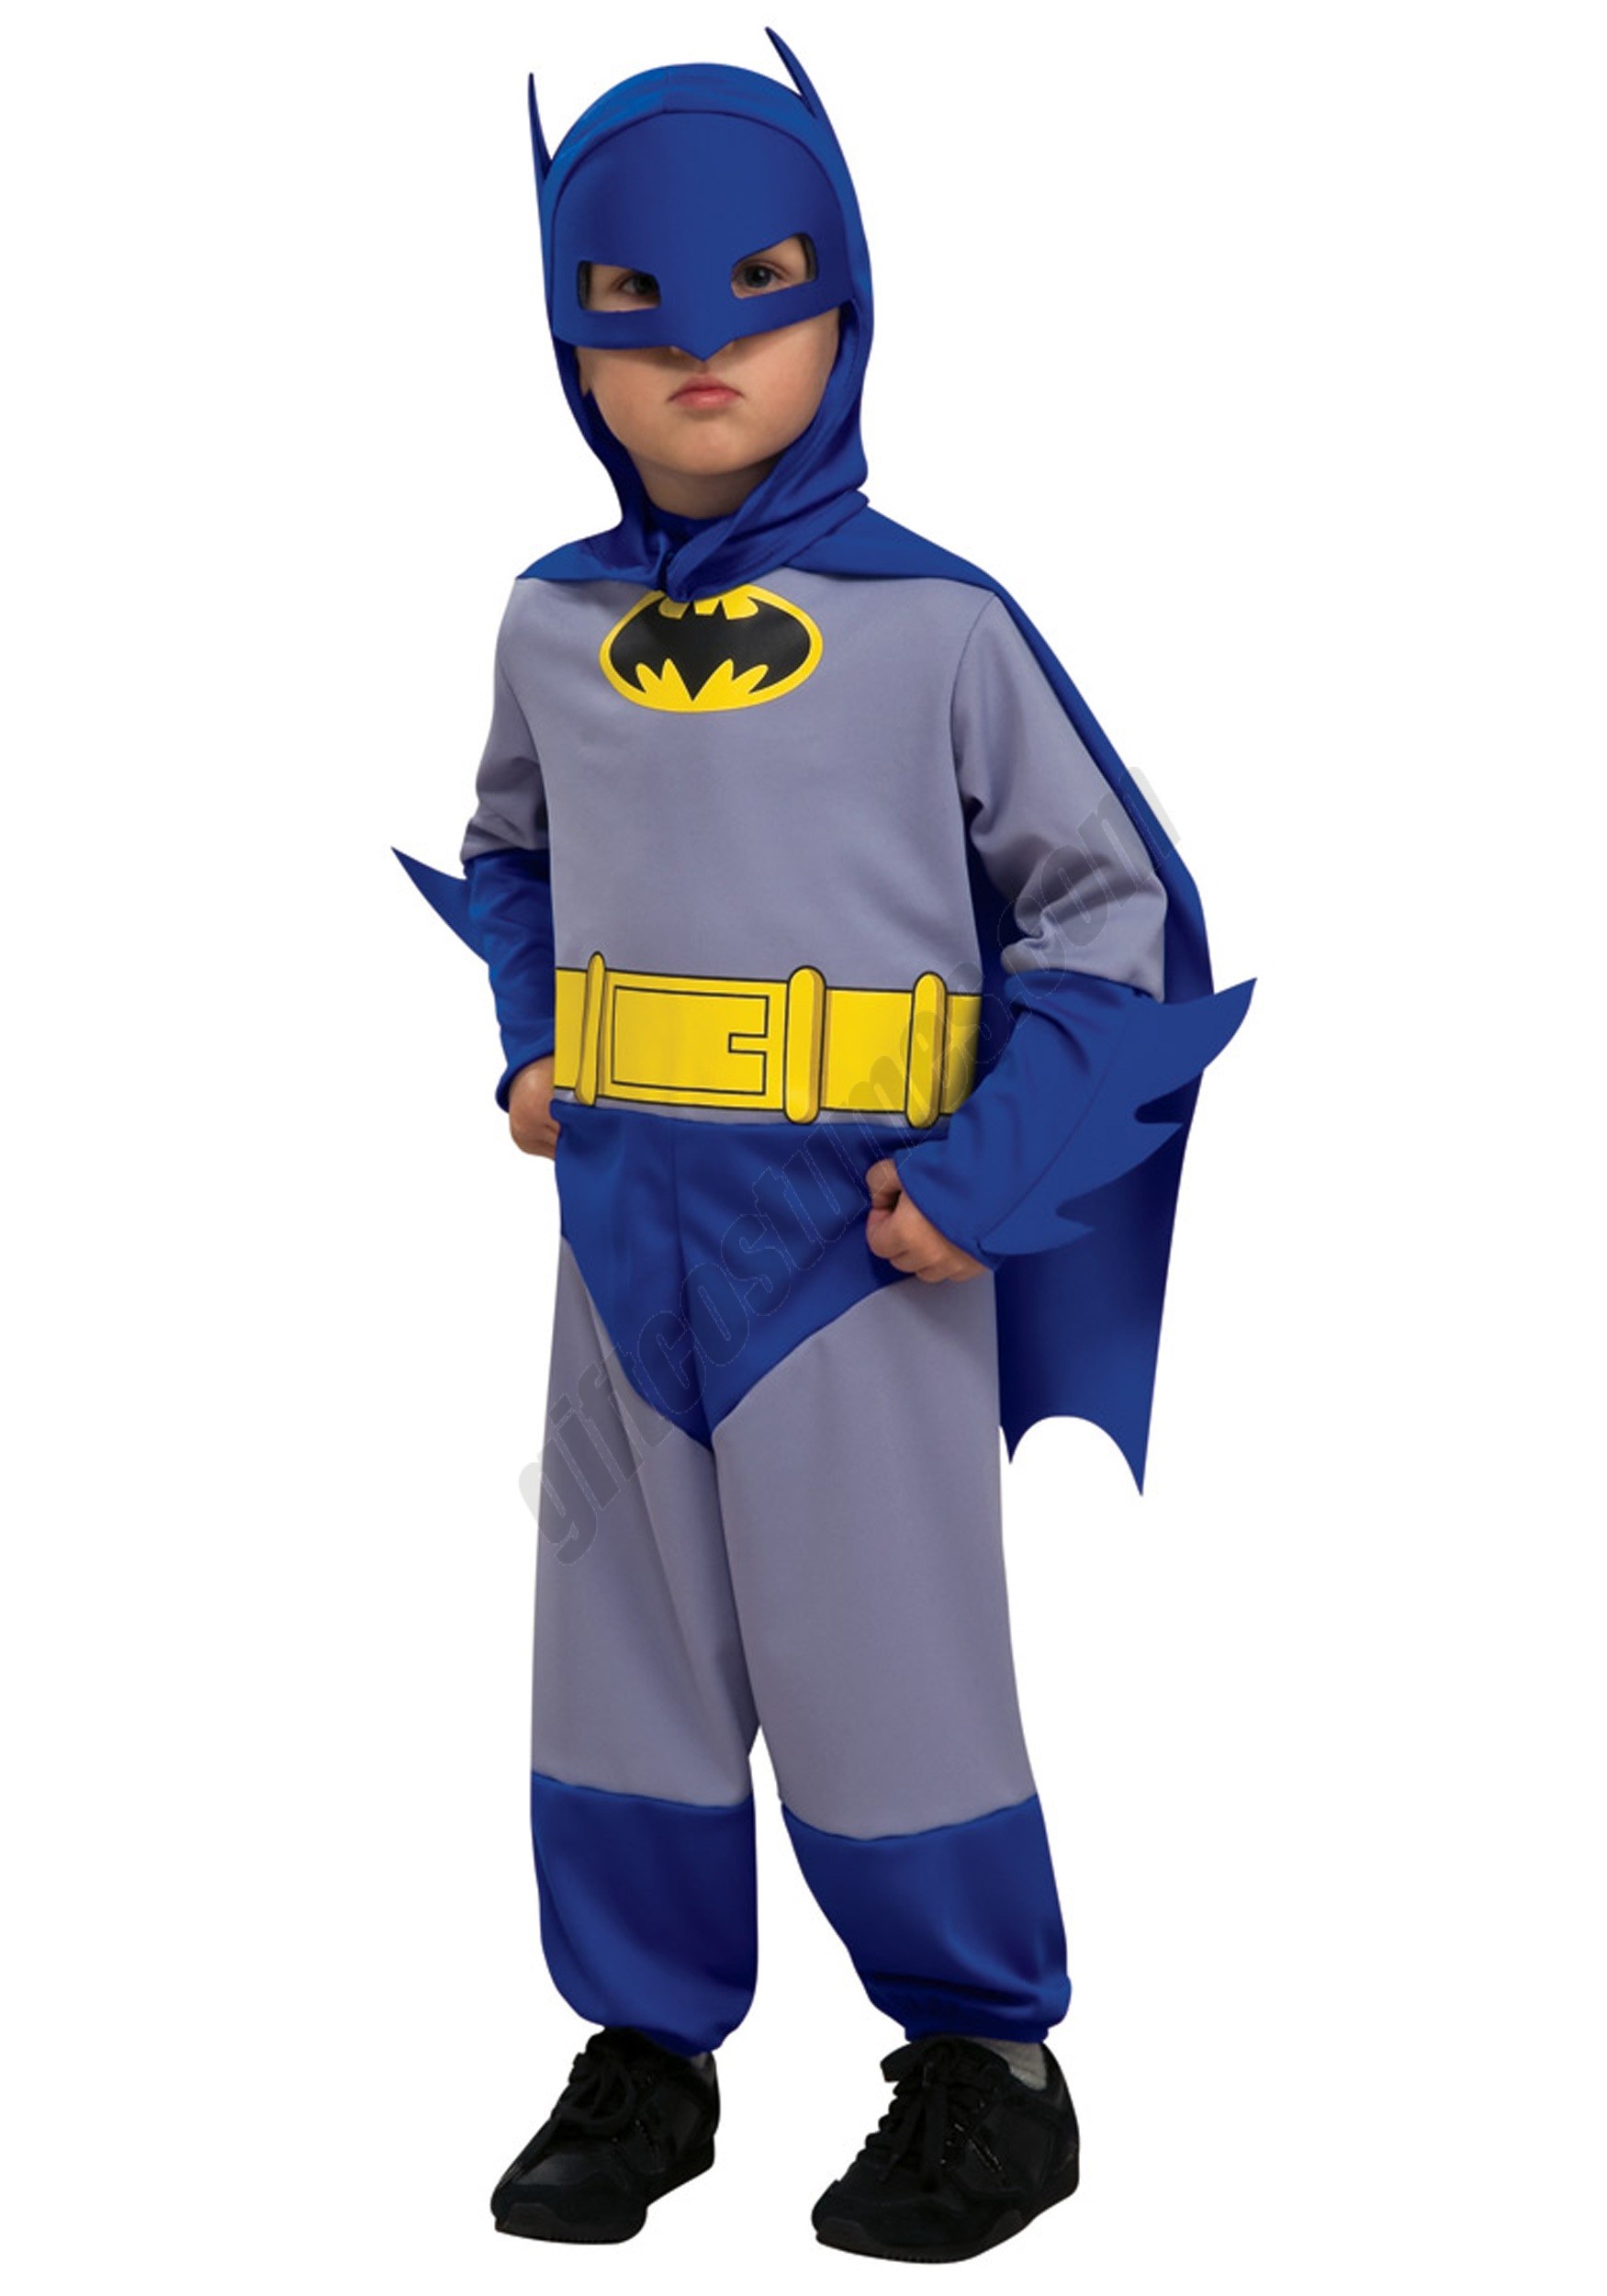 Infant / Toddler Batman Costume Promotions - Infant / Toddler Batman Costume Promotions